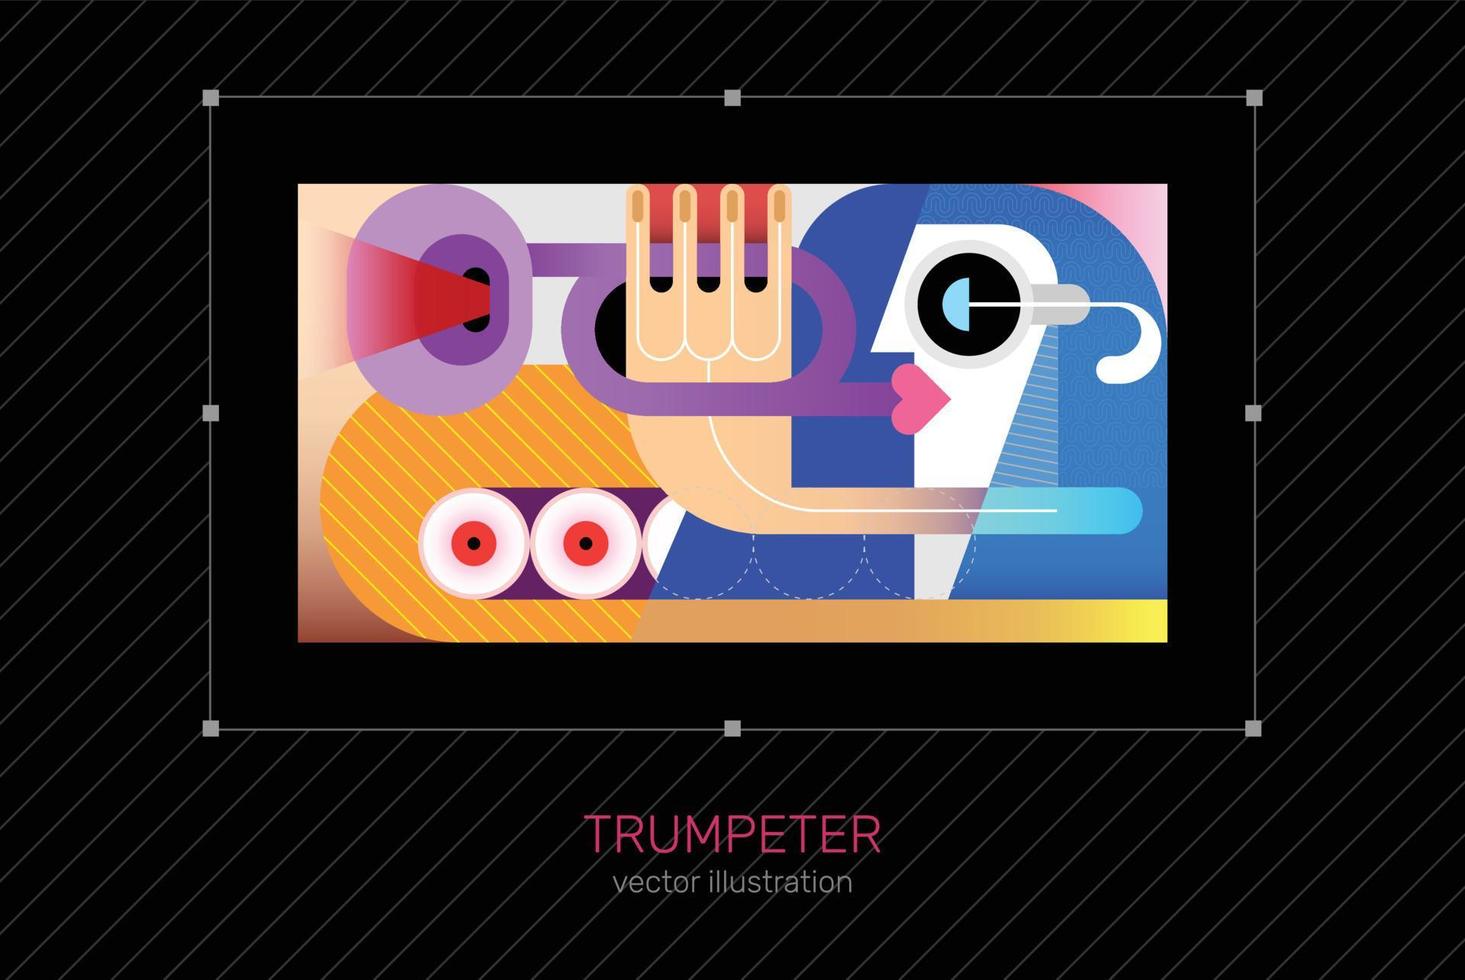 trumpeter vector poster design